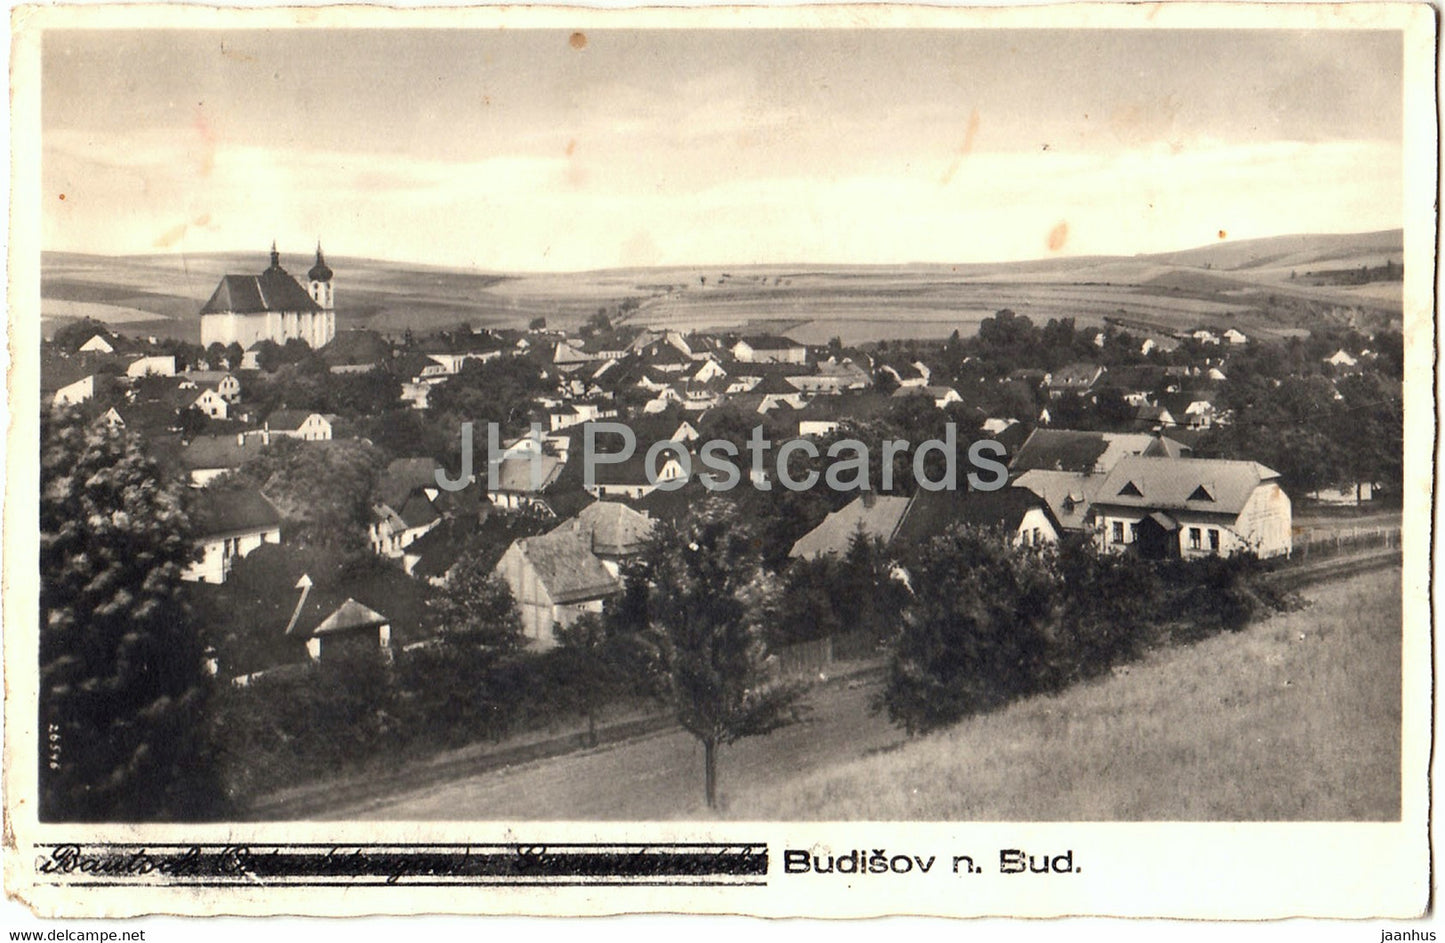 Budisov n Bud - Budisov nad Budisovkou - old postcard - 1946 - Czech Republic - Czechoslovakia - used - JH Postcards